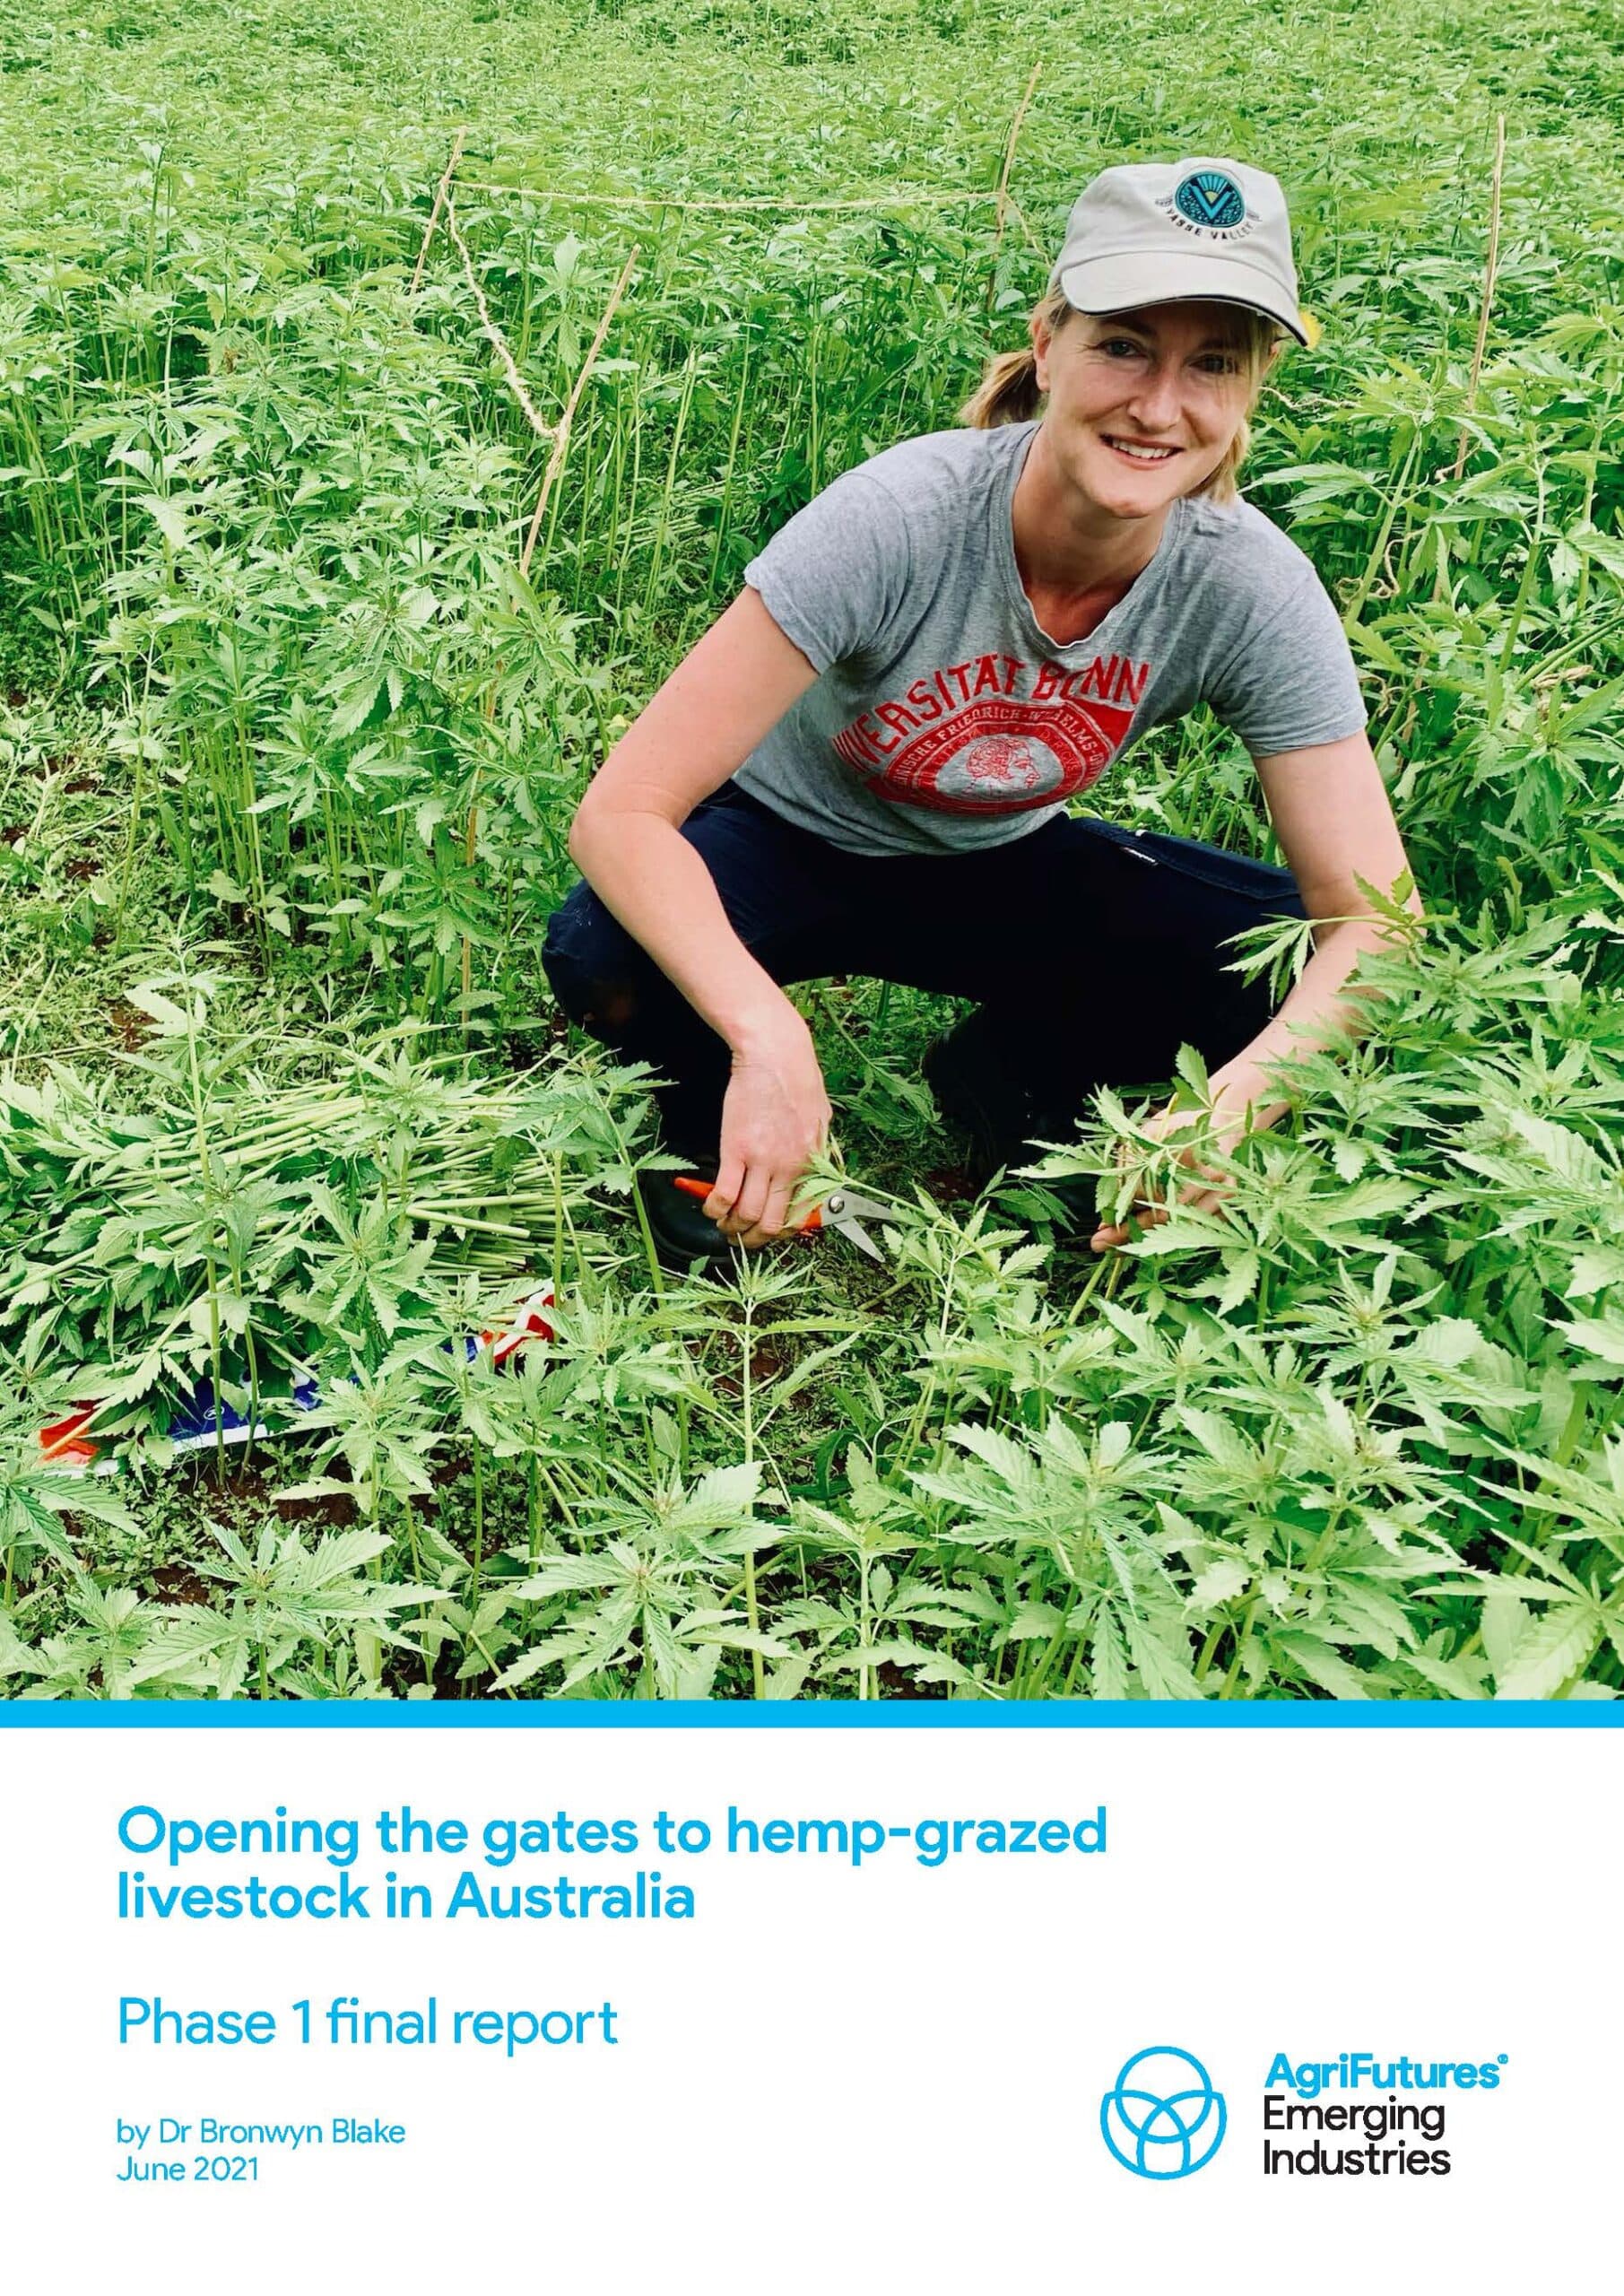 Opening the gates to hemp-grazed livestock in Australia - image